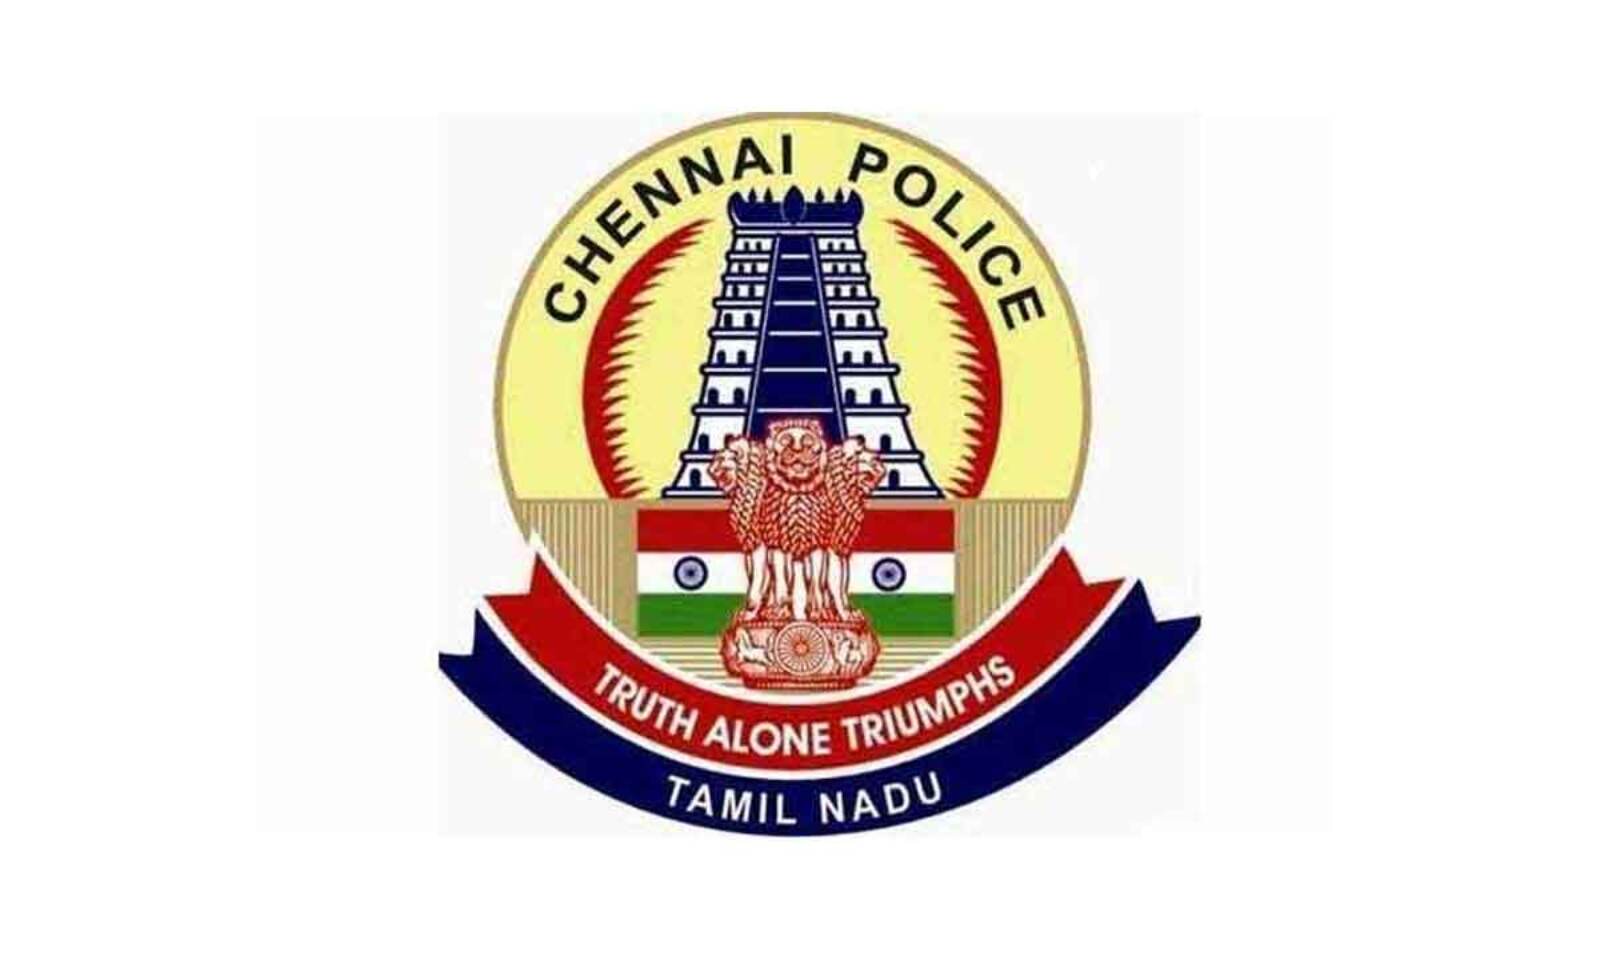 Tamil Nadu Police (@tnpoliceofficial) • Instagram photos and videos